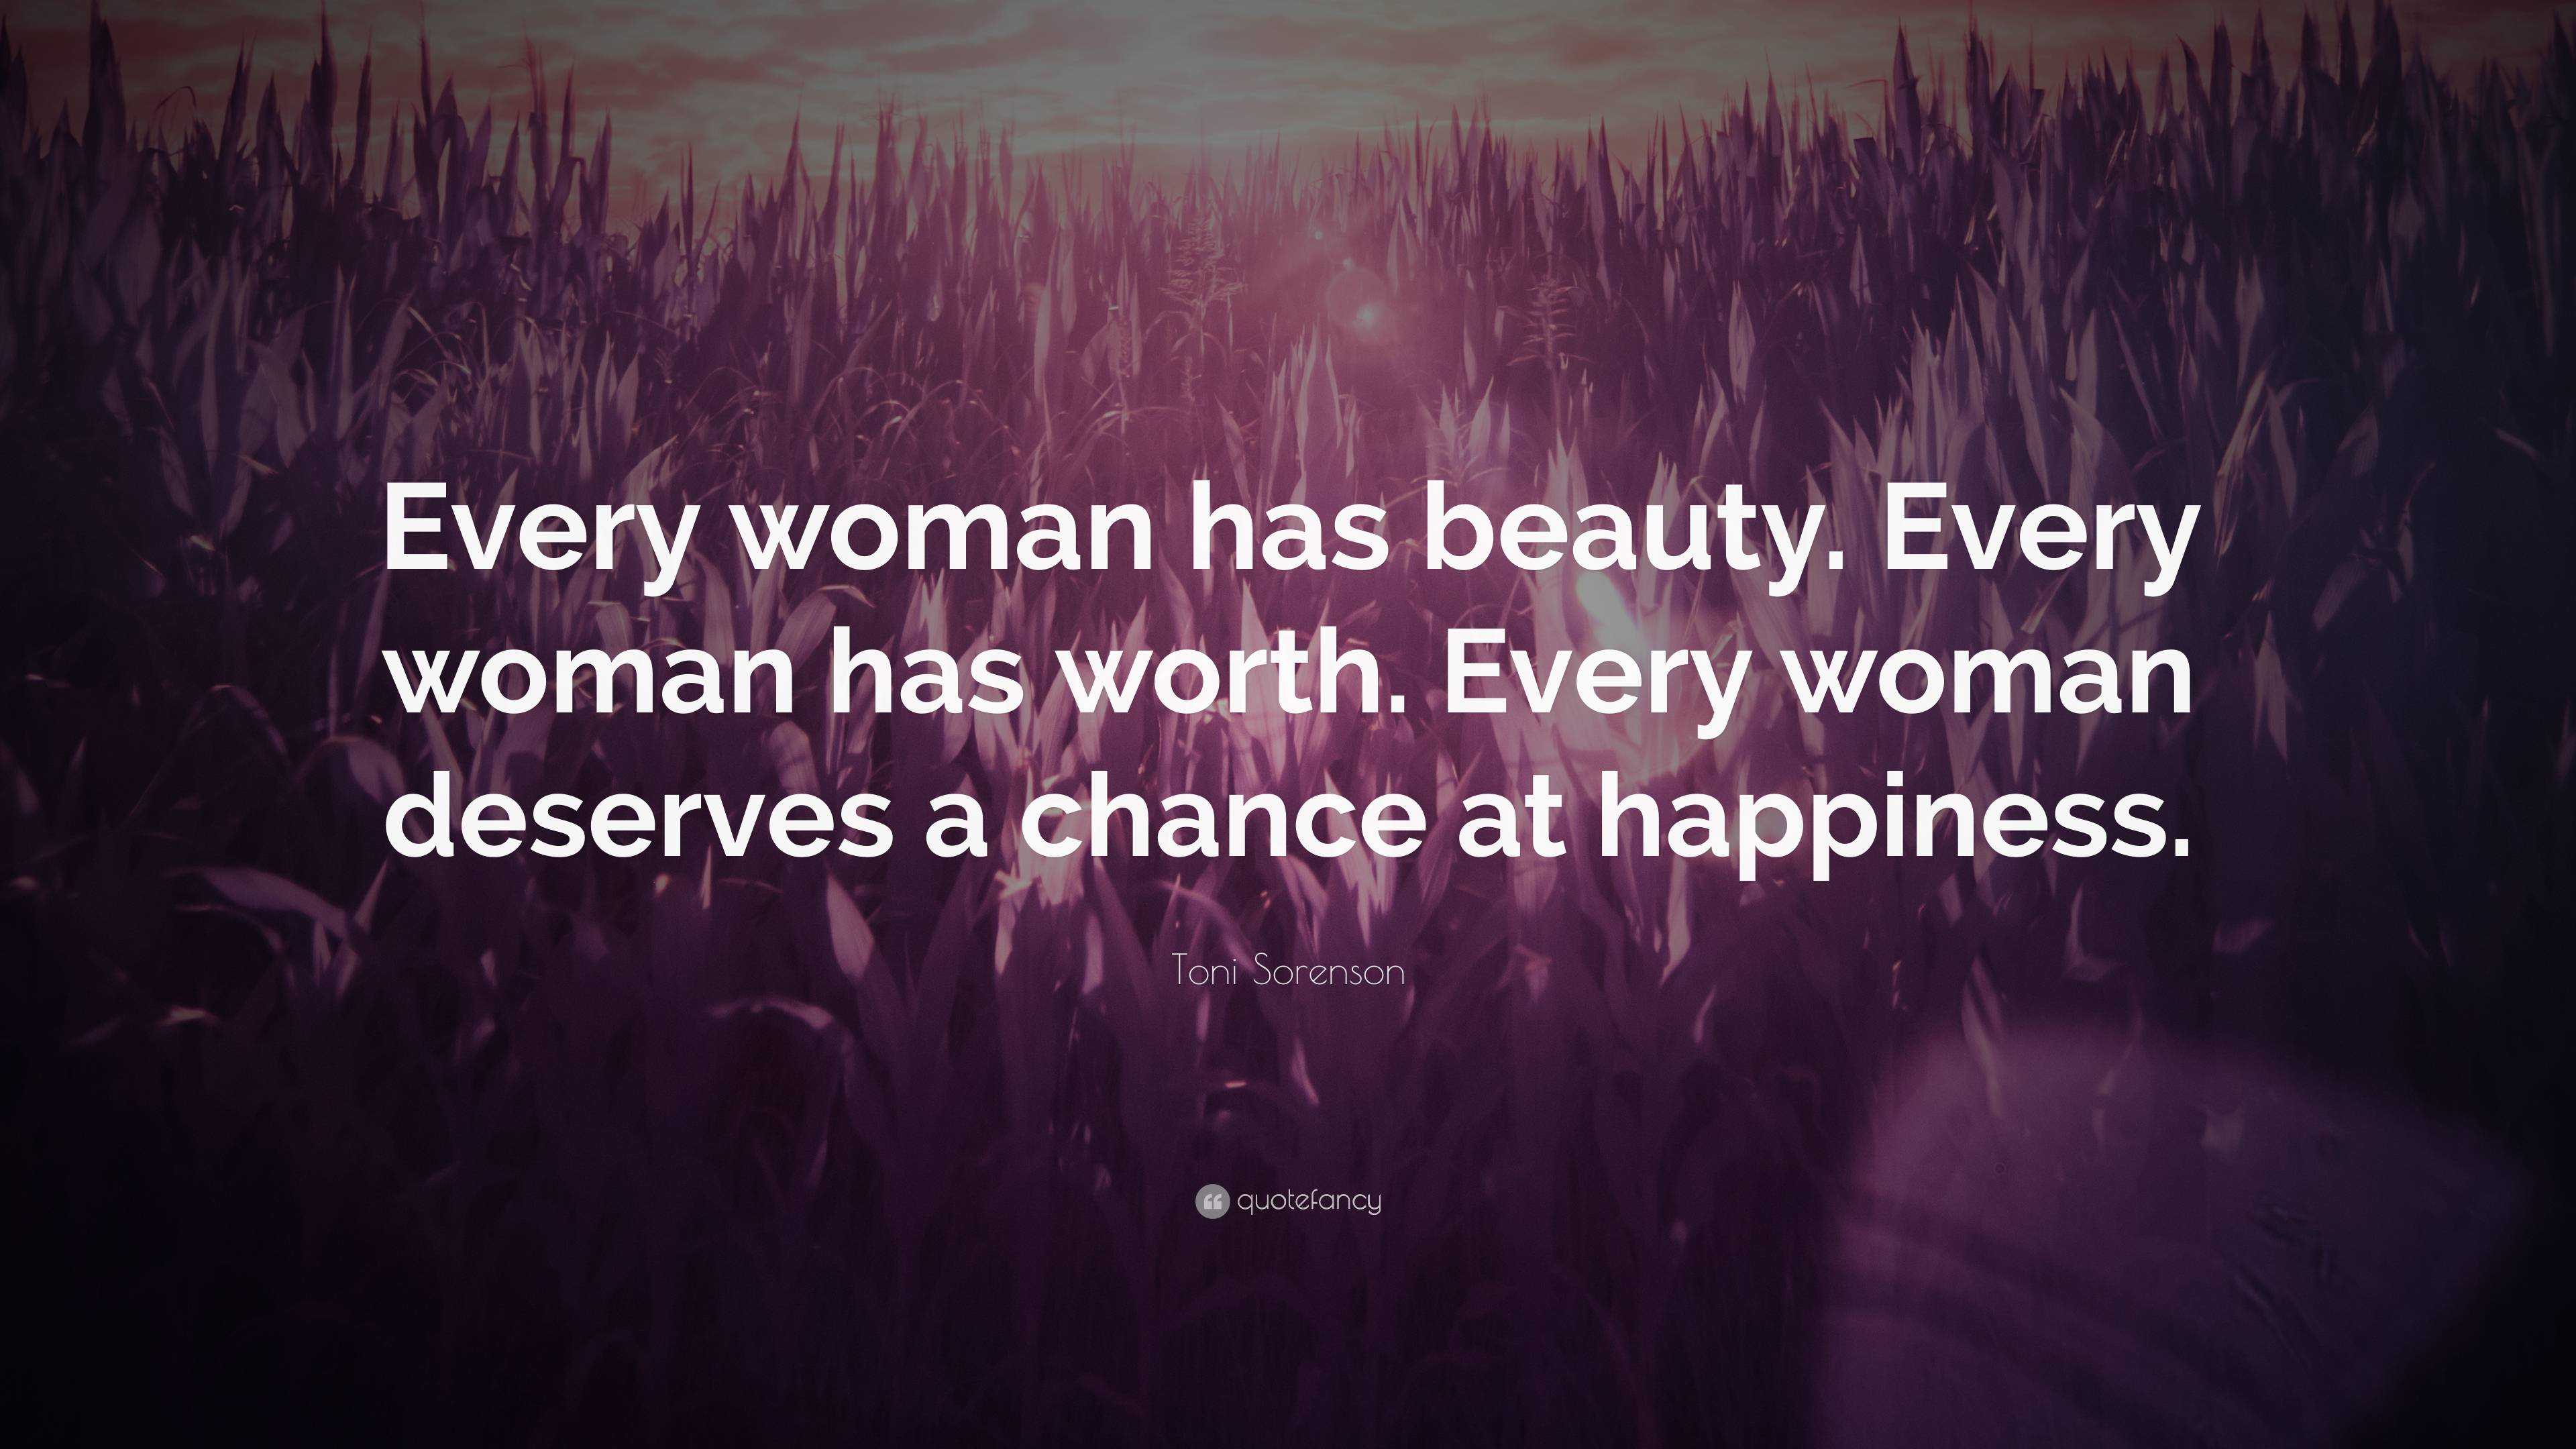 Toni Sorenson Quote: “Every woman has beauty. Every woman has worth ...